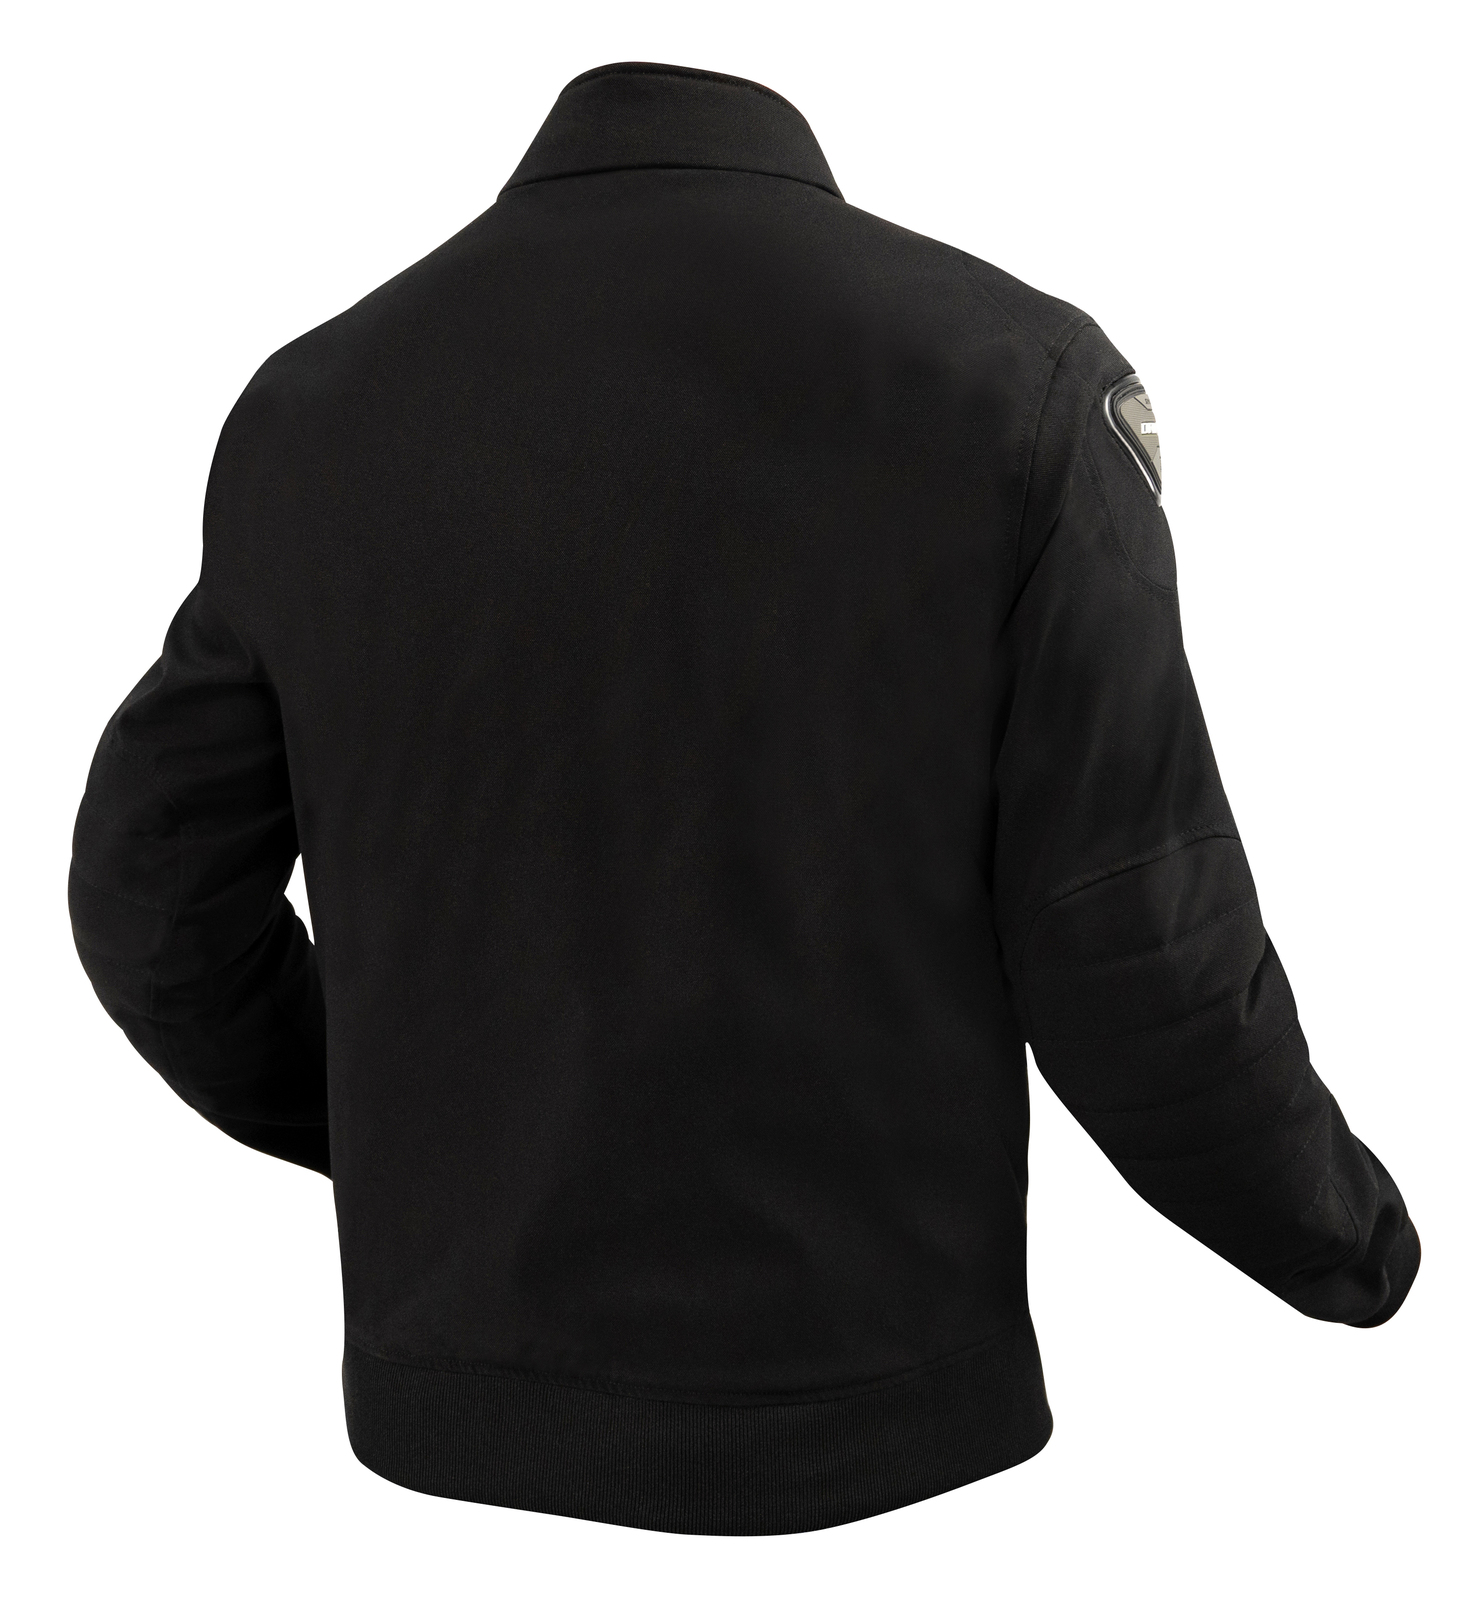 DriRider Motion Black Textile Jacket